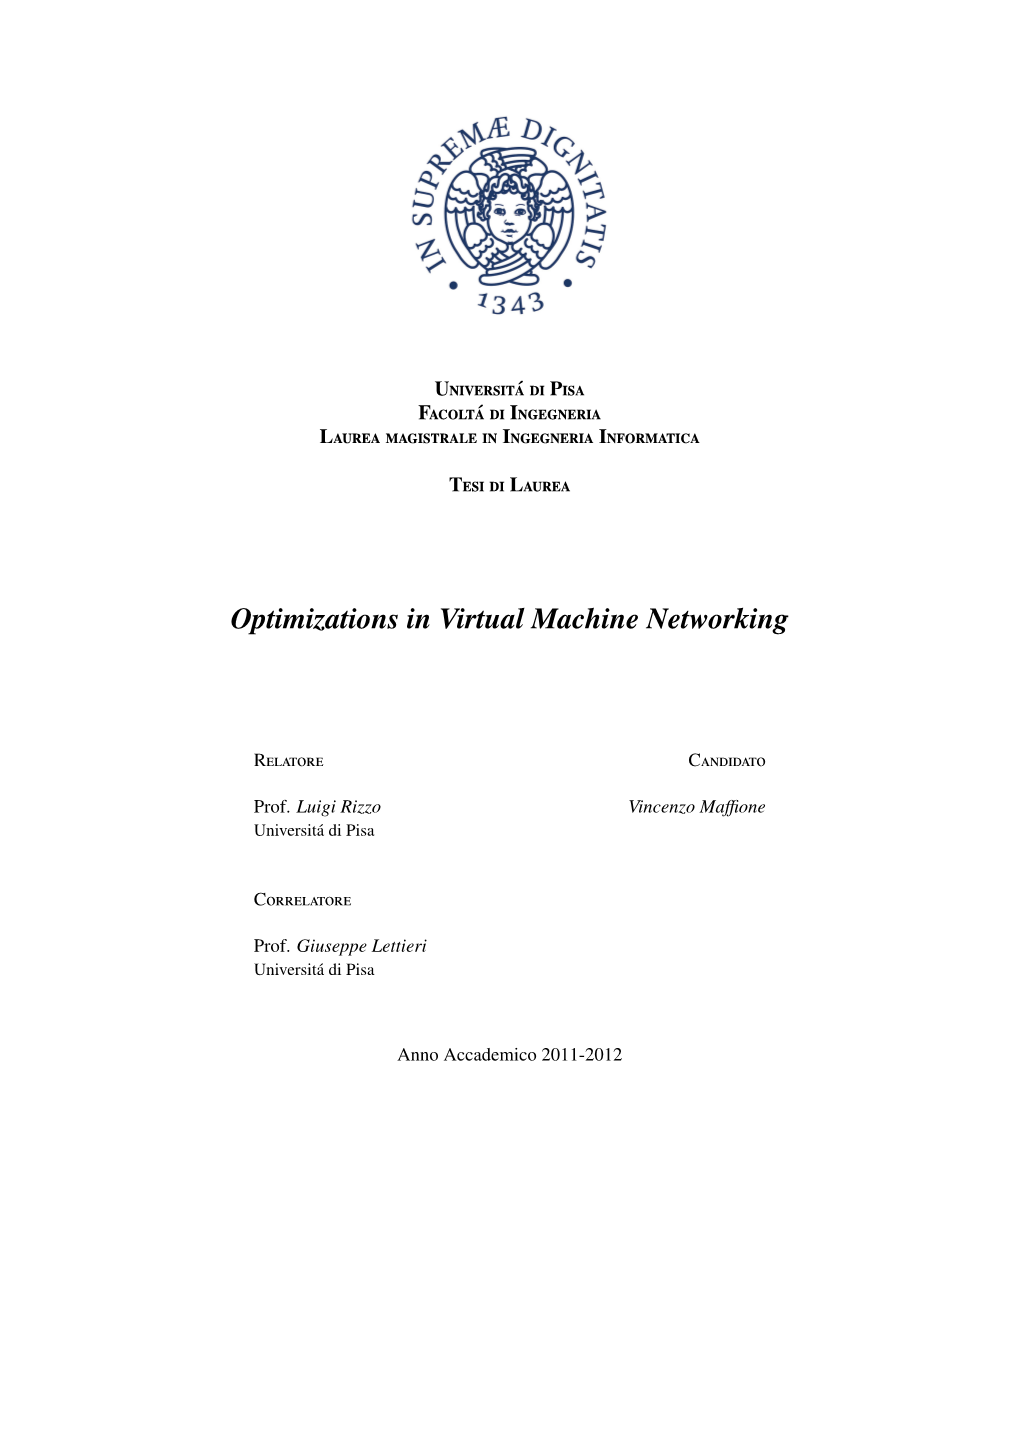 Optimizations in Virtual Machine Networking